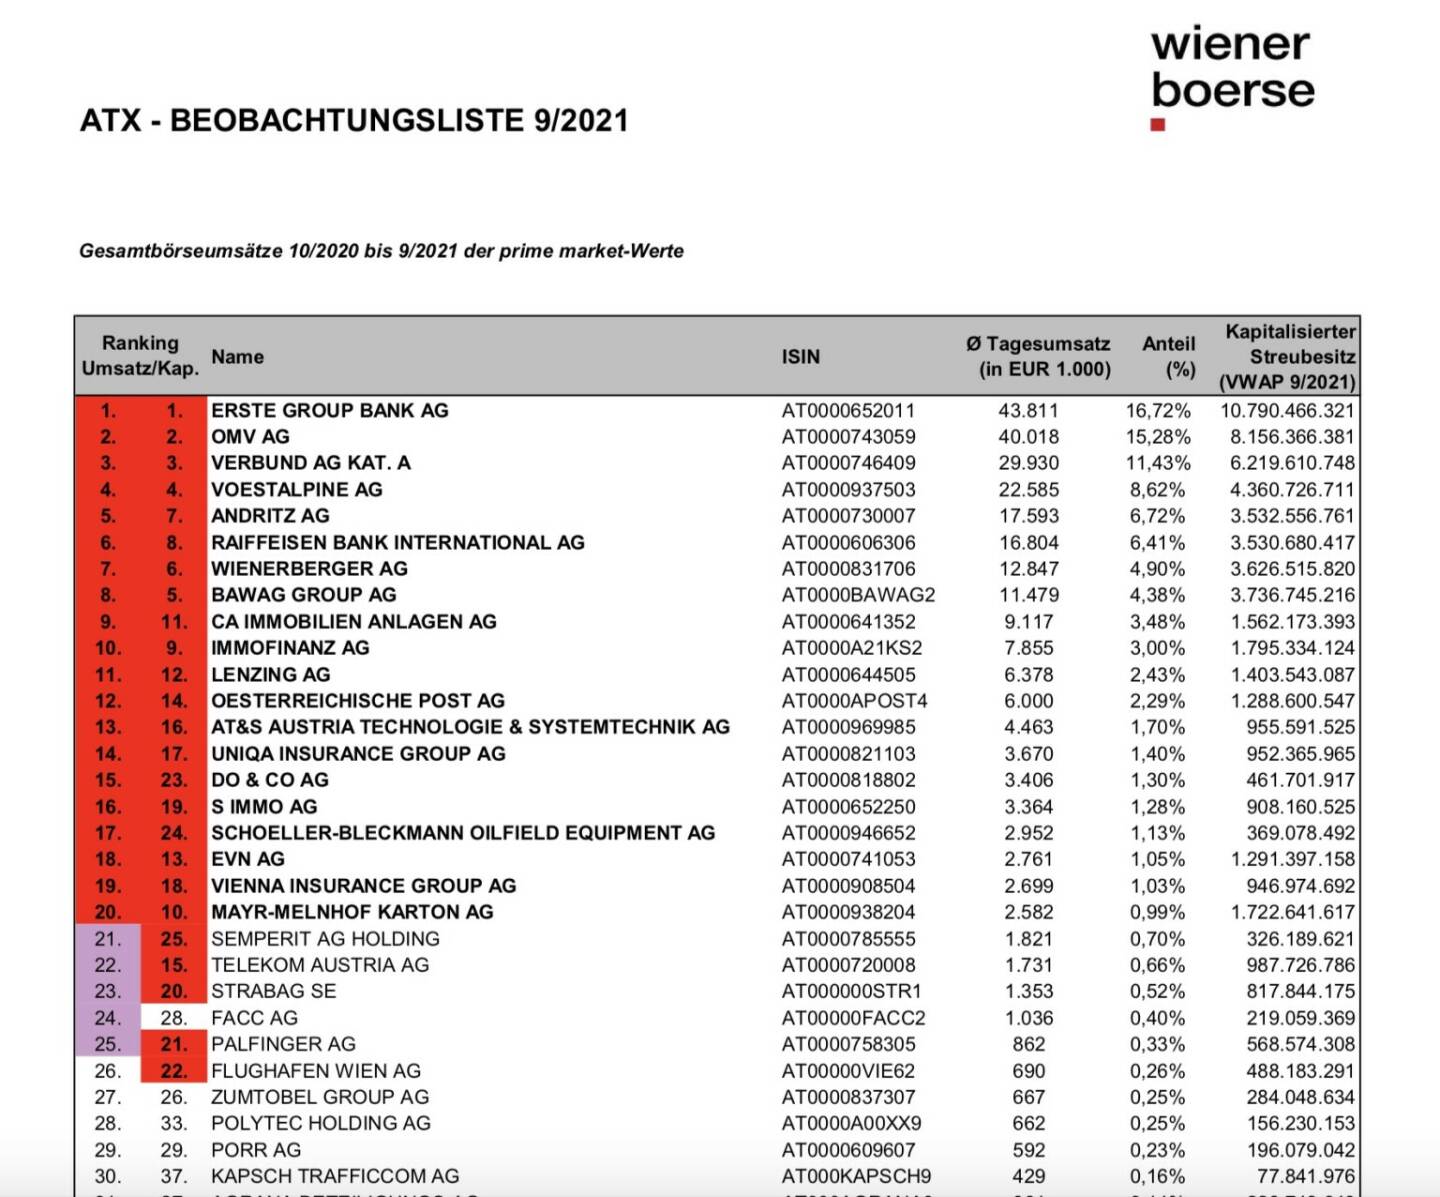 ATX Beobachtungsliste 8/2021 (c) Wiener Börse